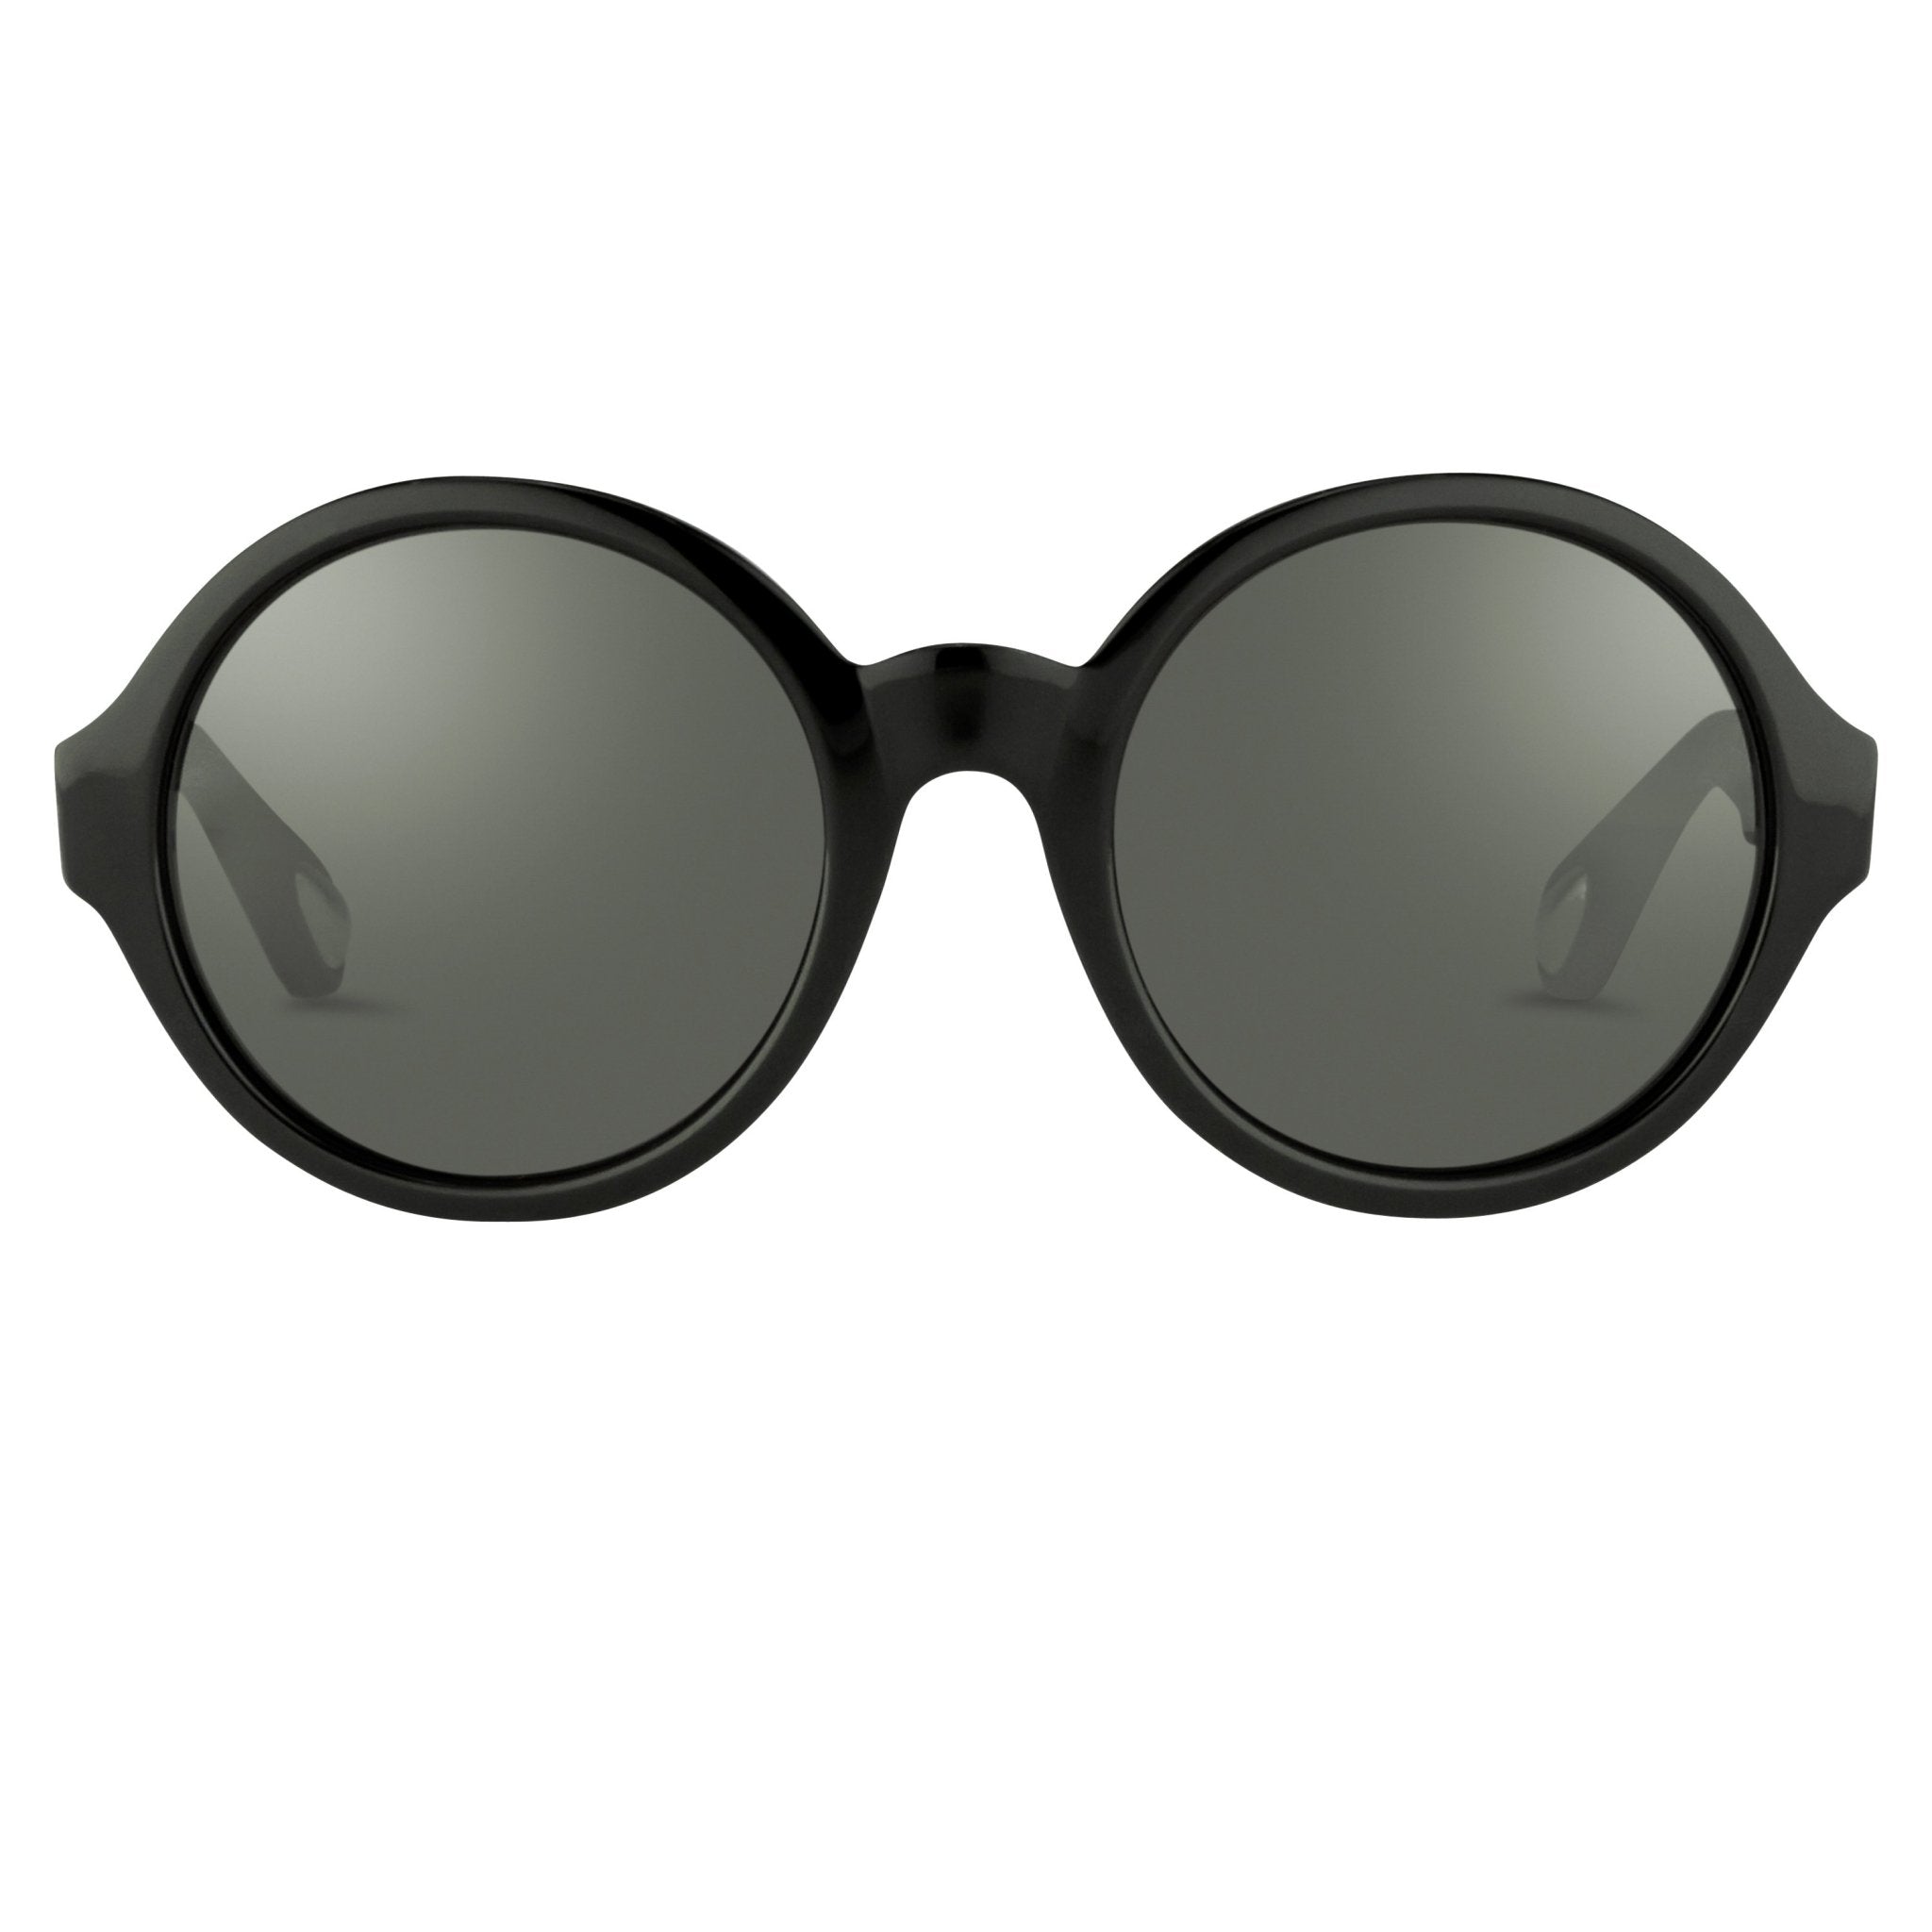 Ann Demeulemeester Sunglasses Round Black - Watches & Crystals